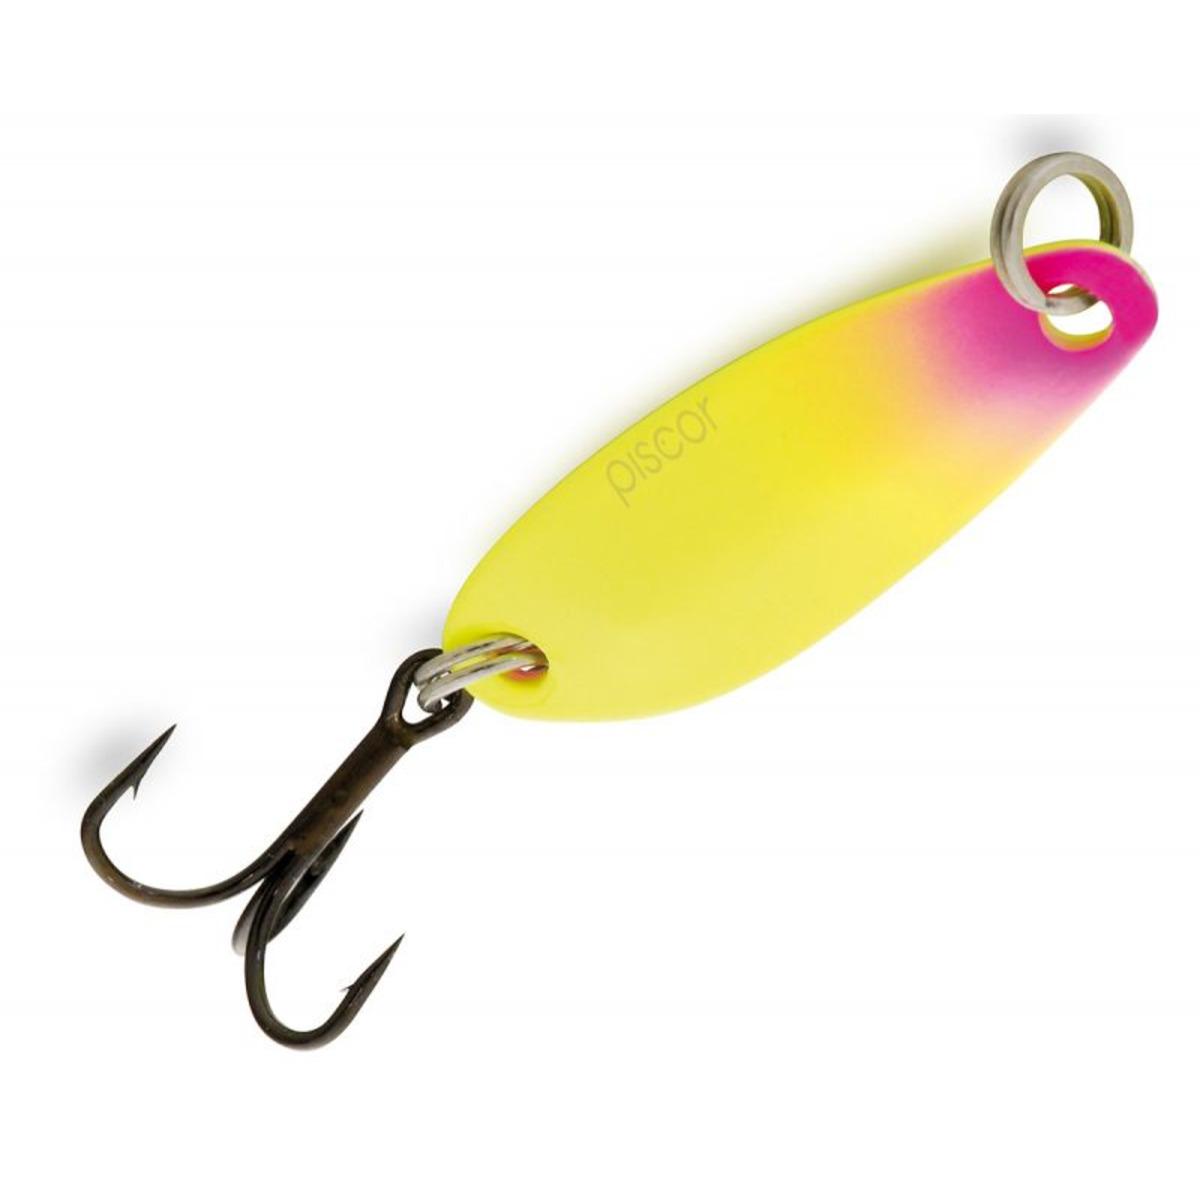 Seika Edge Spoon - 30 mm - 3.00 g - Yellow-Fluo Pink         